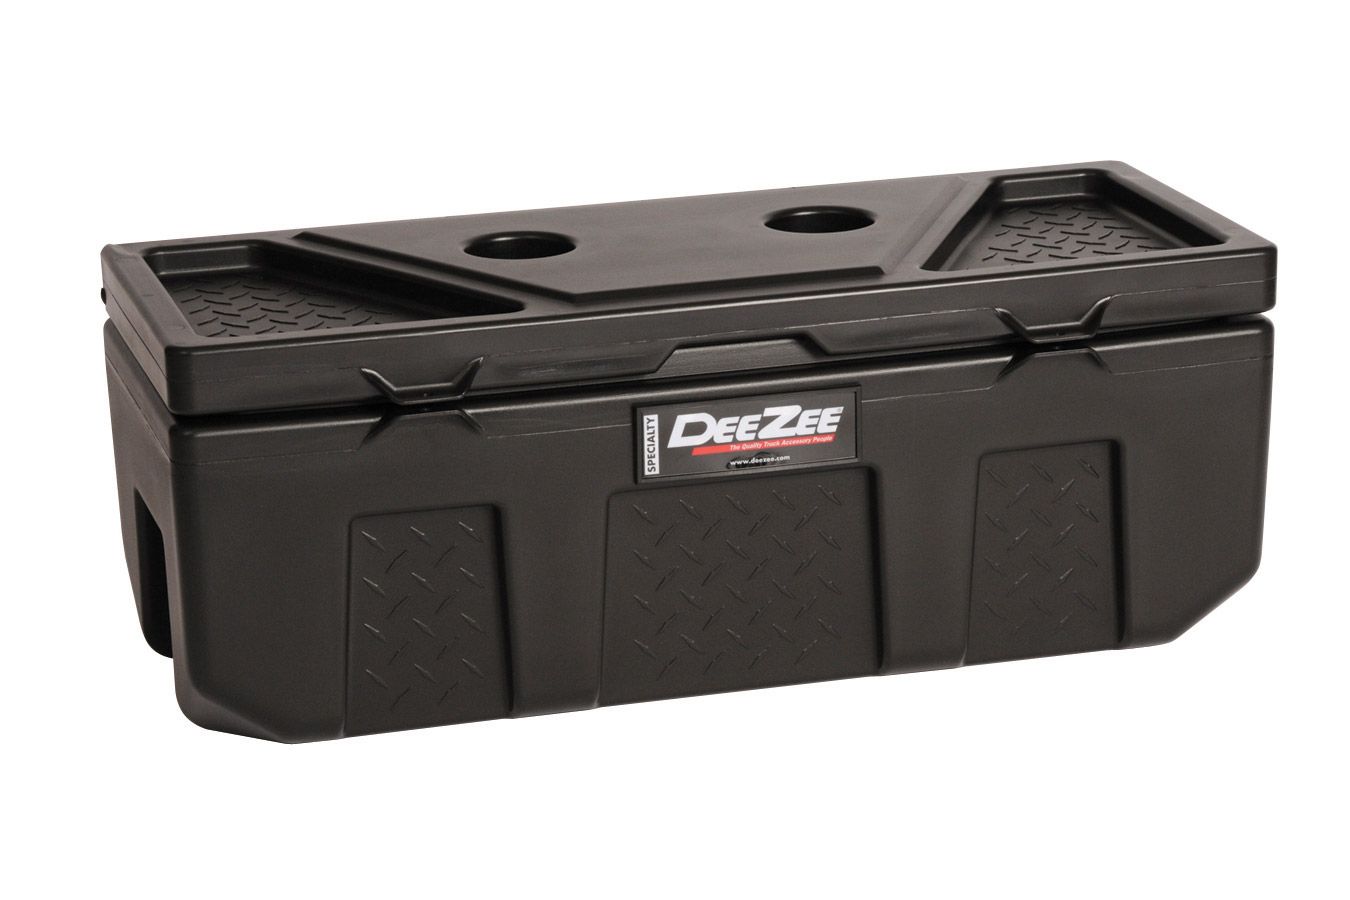 Dee Zee DZ6535P Tool Box Specialty Utility Chest Plastic